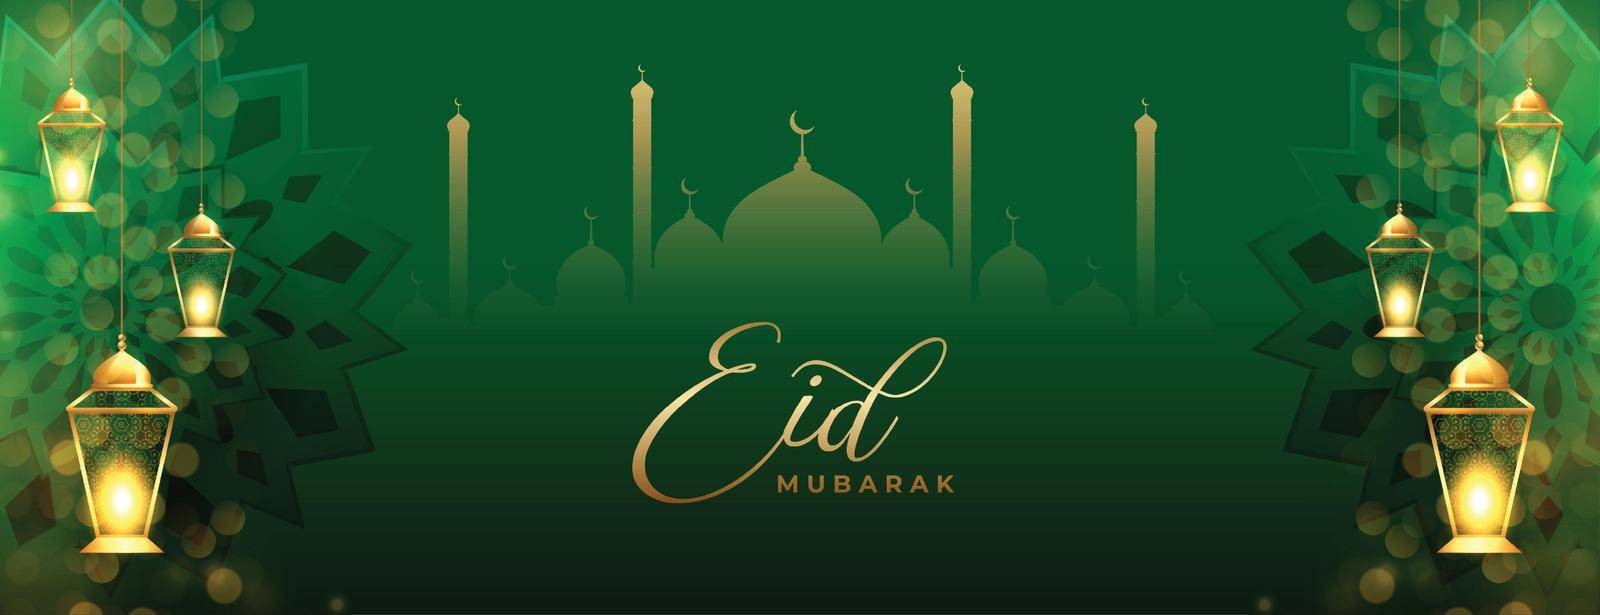 muslim eid festival green banner with lantern decoration